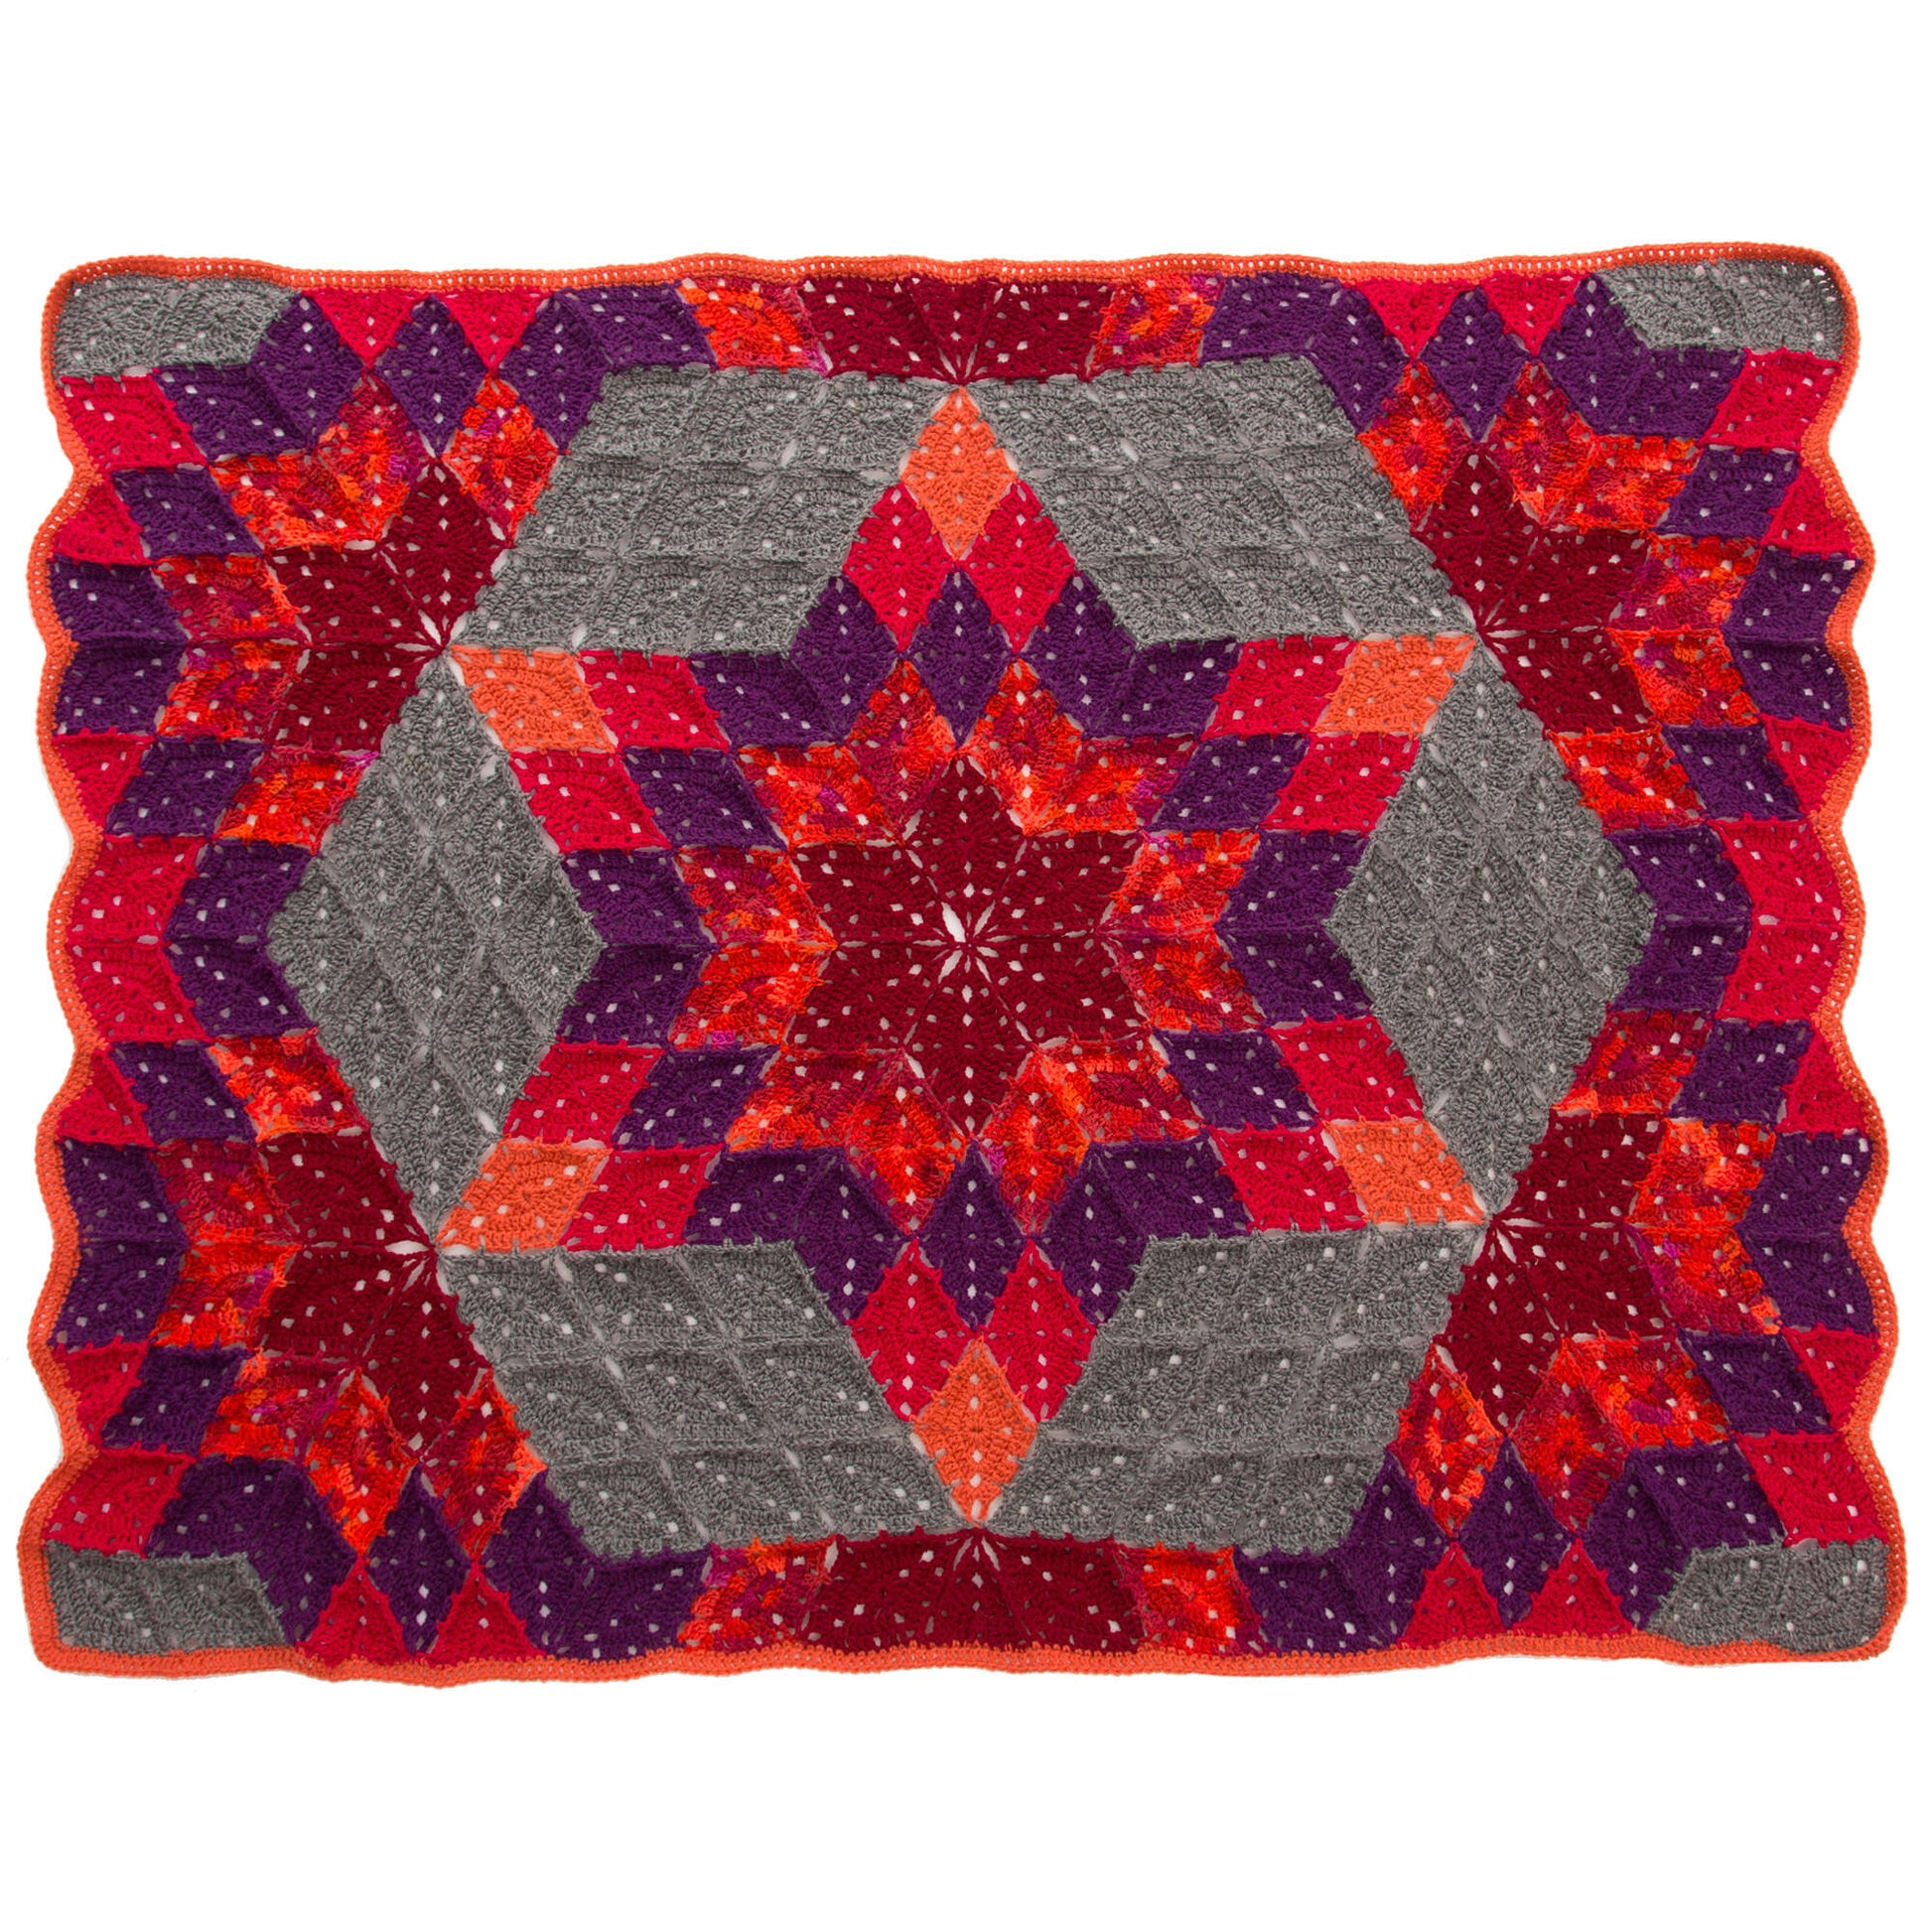 Free Red Heart Desert Star Throw Crochet Pattern